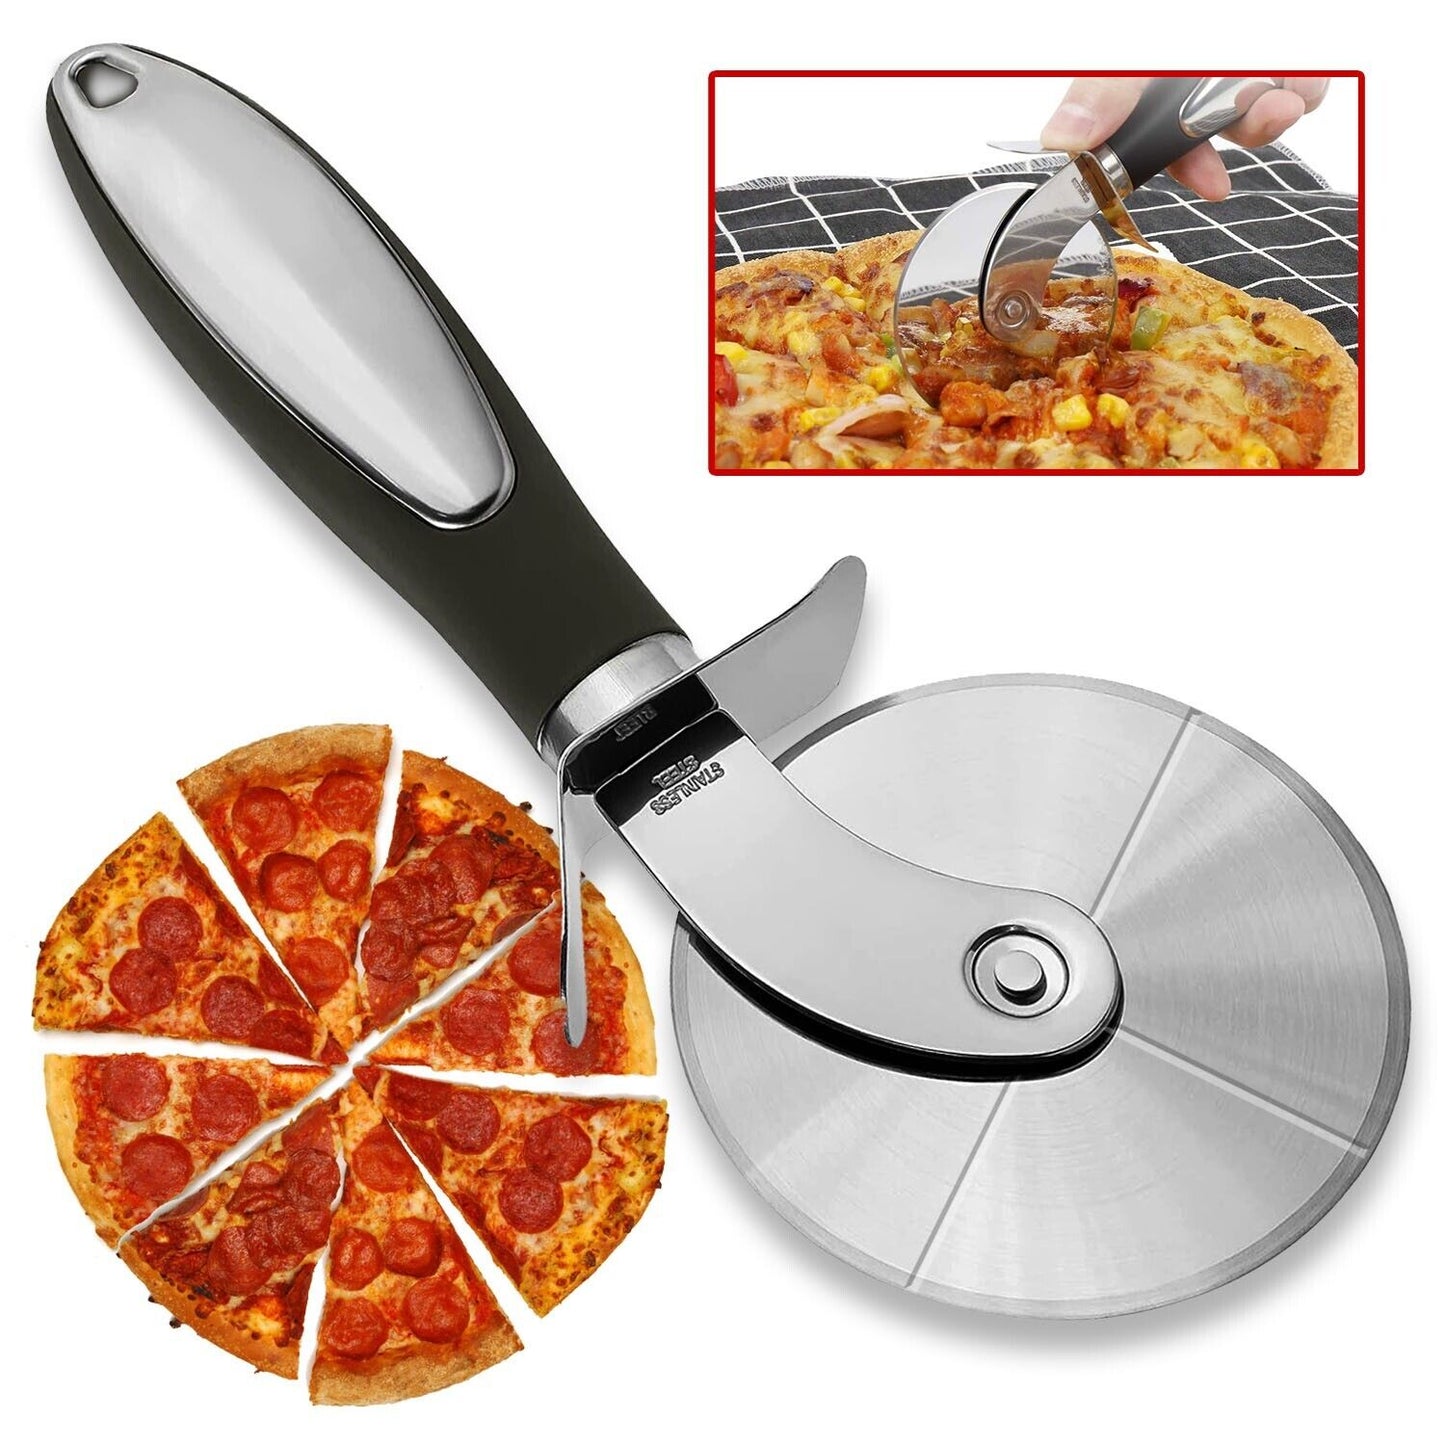 Pizza Cutter WheelPizza Cutter Stainless Steel Pizza Cutter Wheel Super  Pizza Slicer